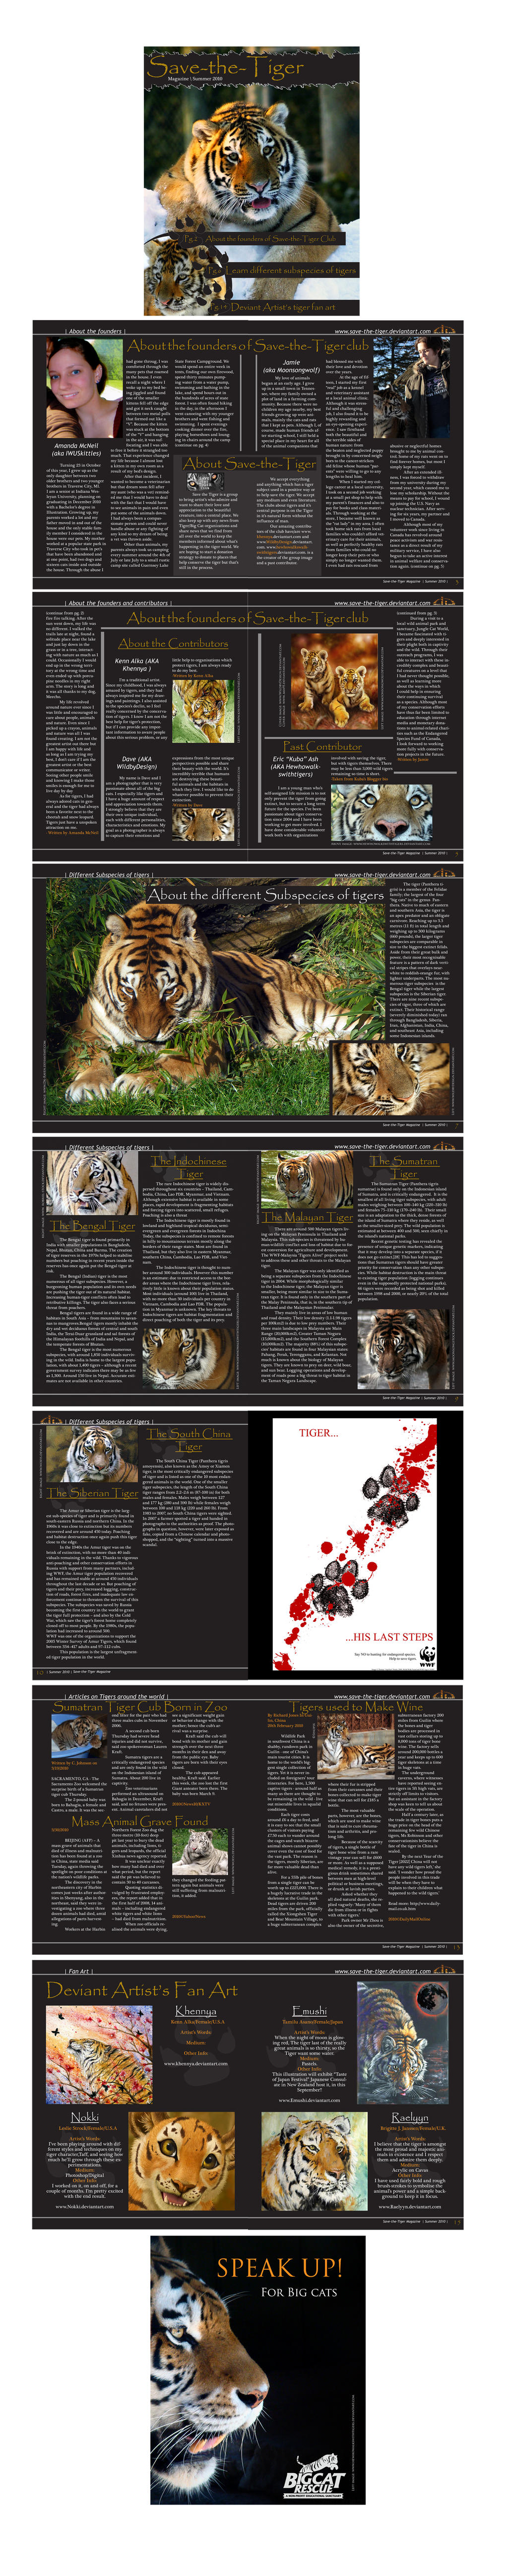 Save the tiger magazine